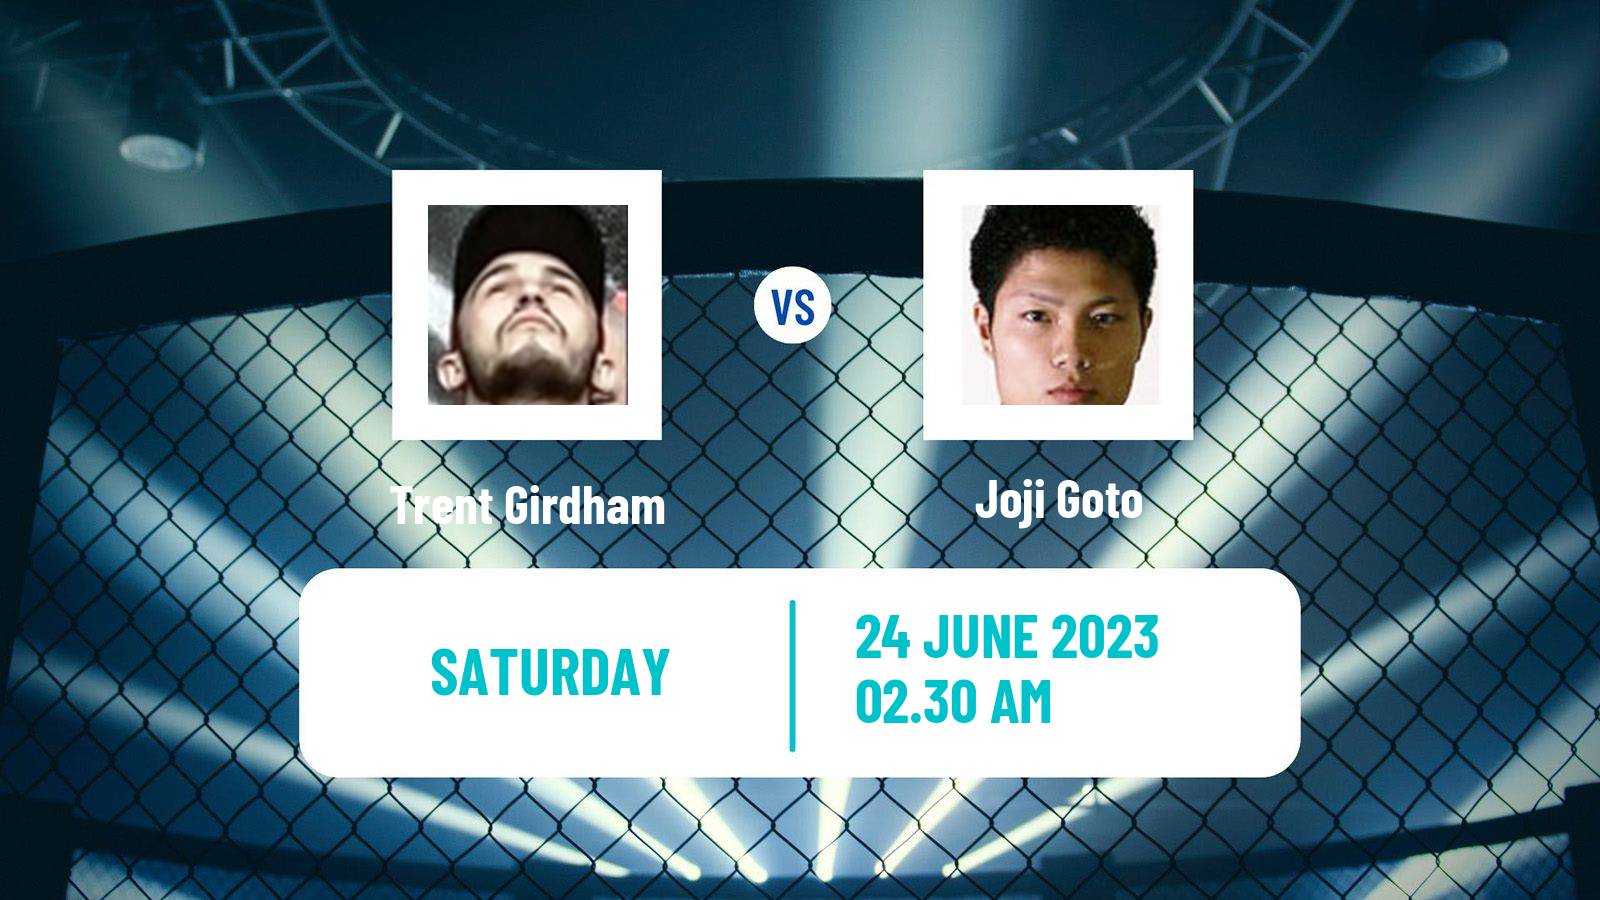 MMA Bantamweight Rizin Men Trent Girdham - Joji Goto